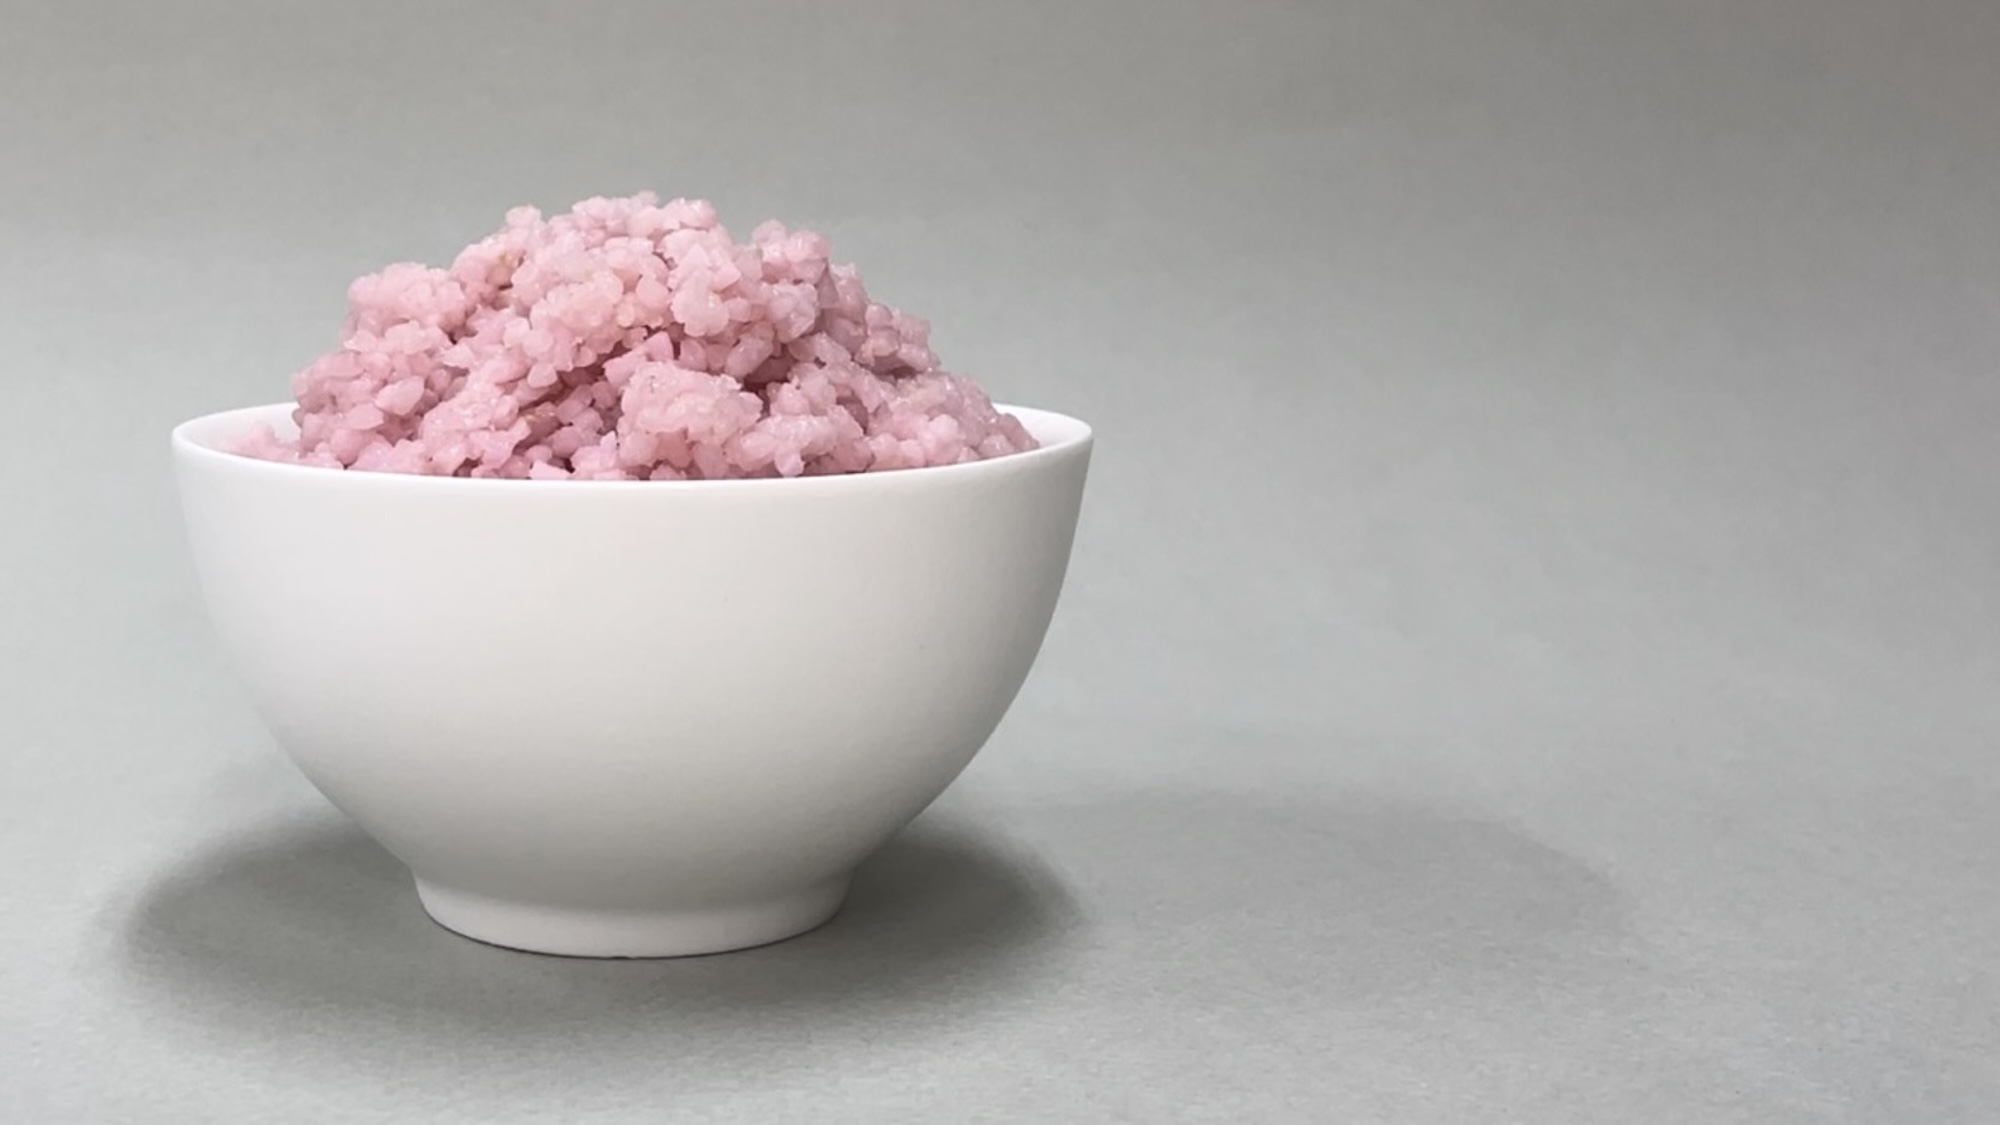 Scientists swear their lab-grown ‘beef rice’ tastes ‘pleasant’